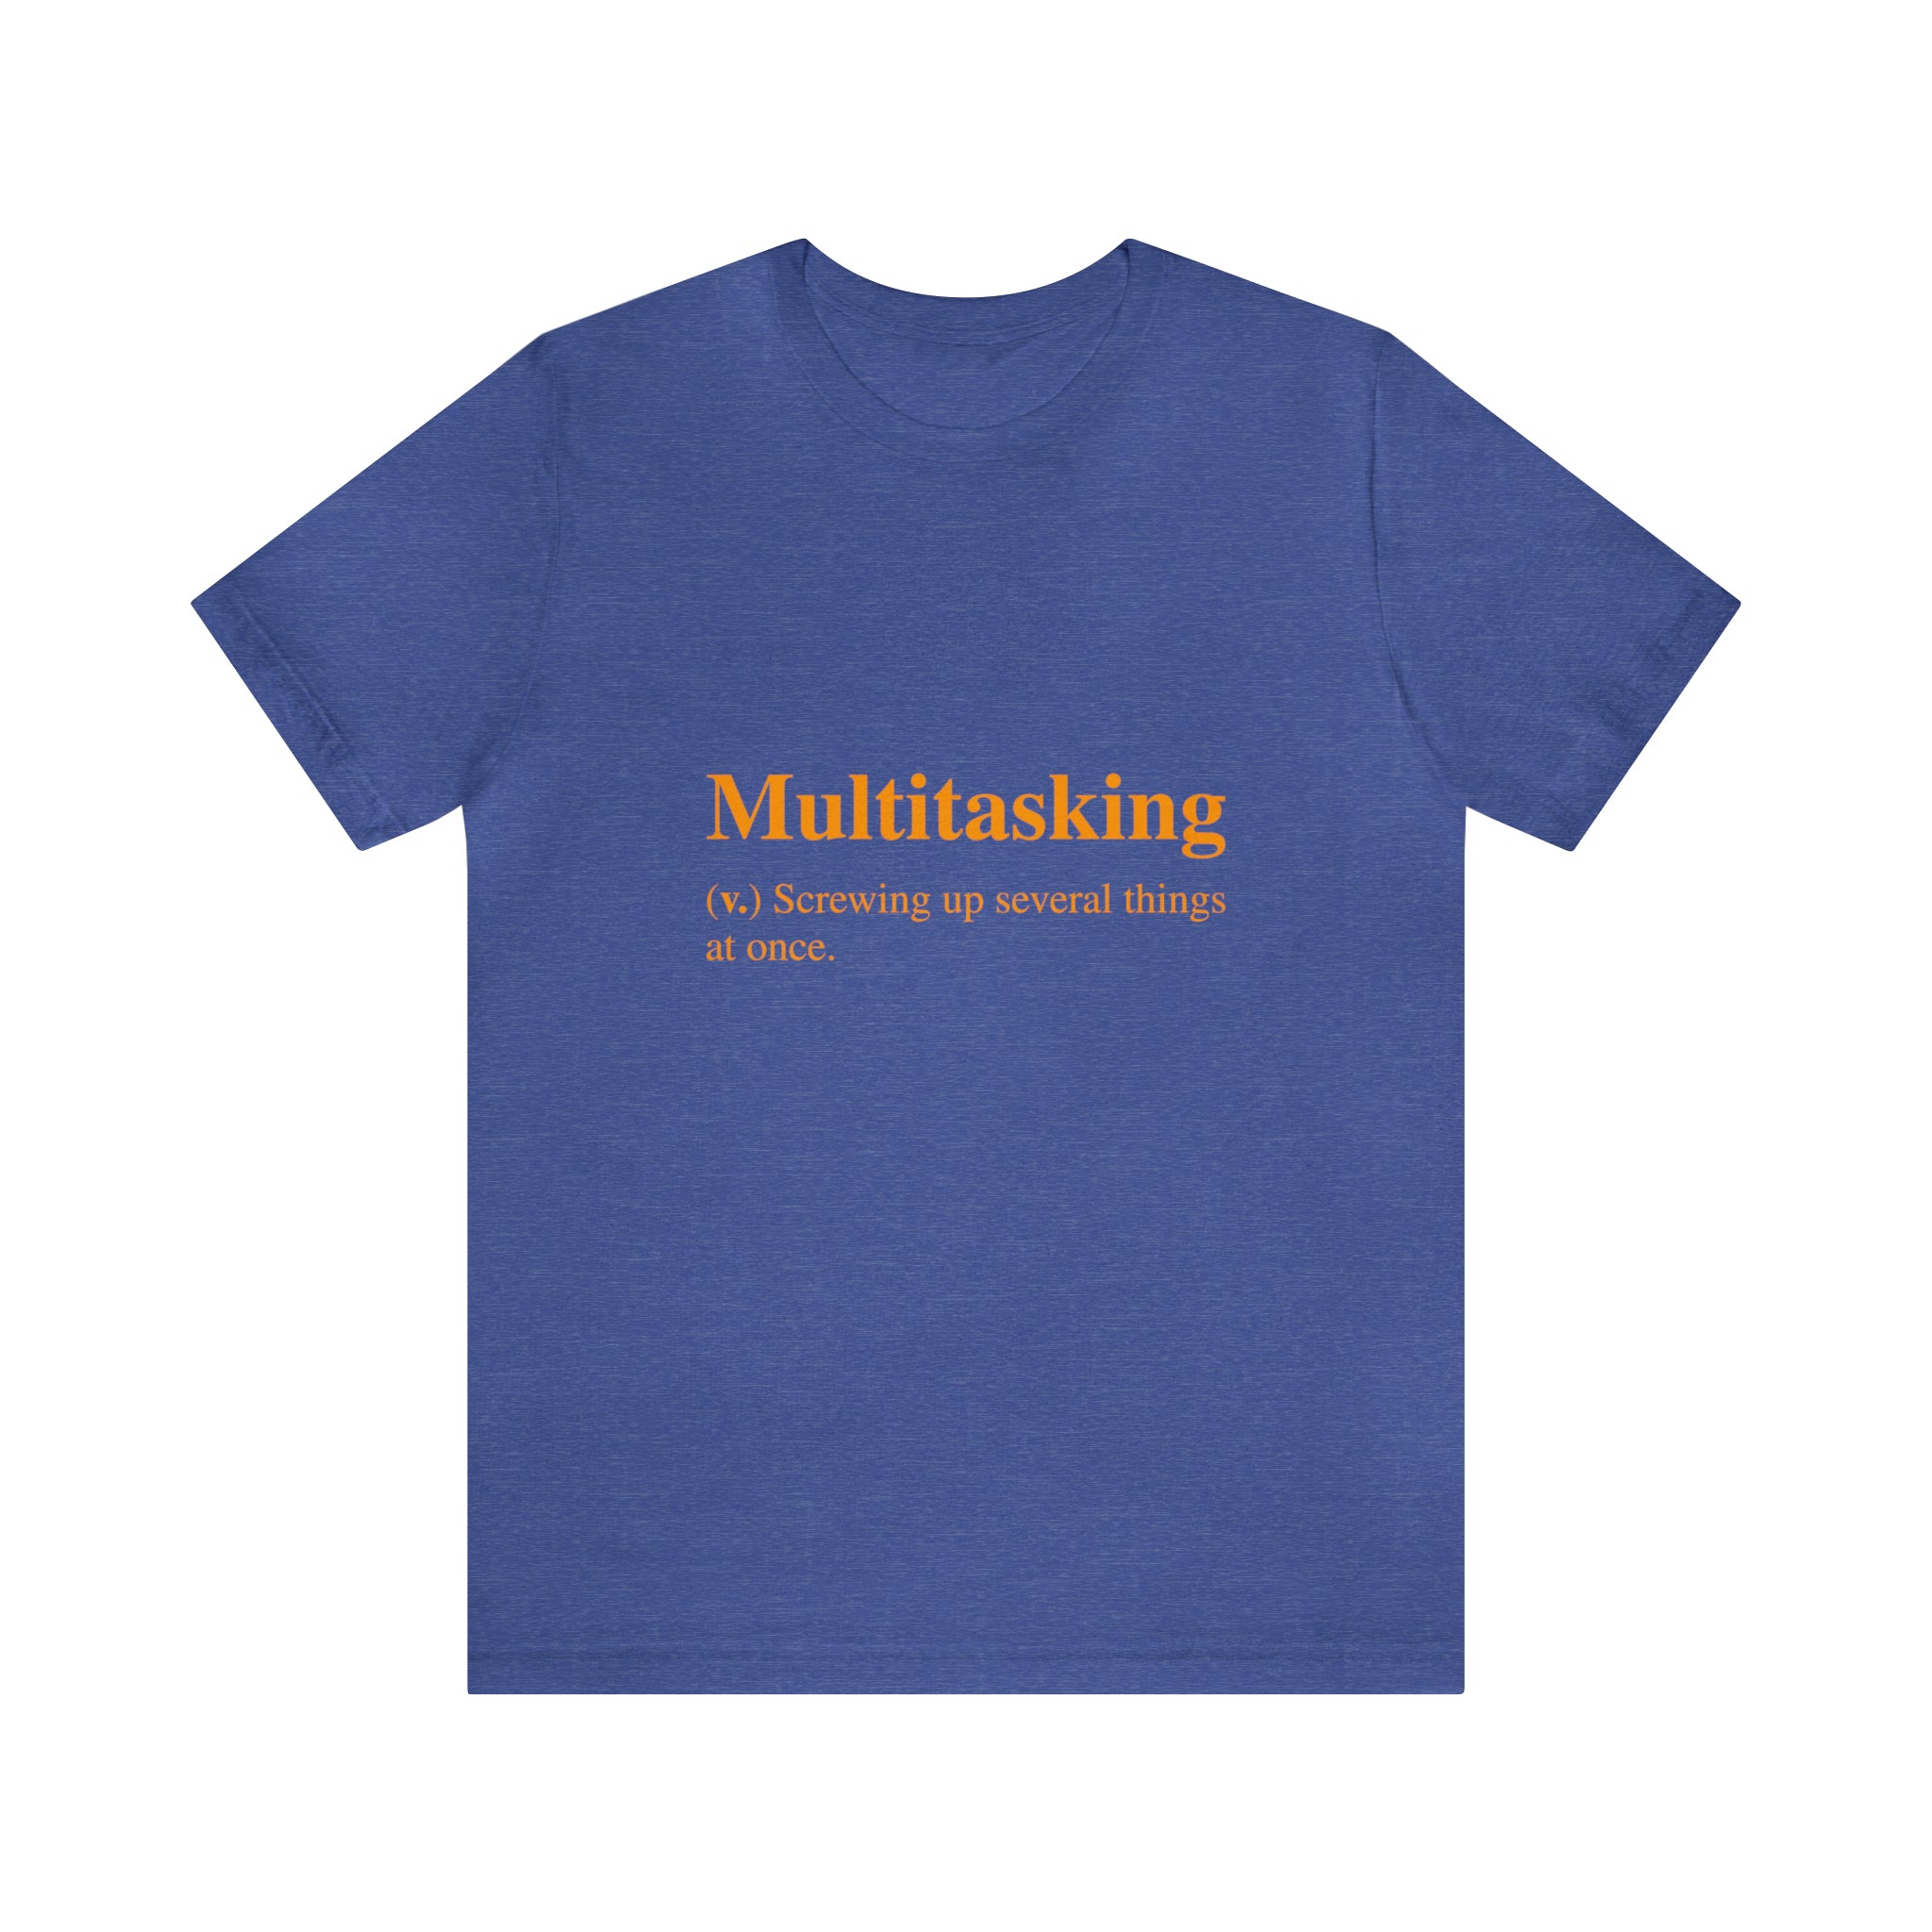 A stylish Multitasking T-Shirt in blue.